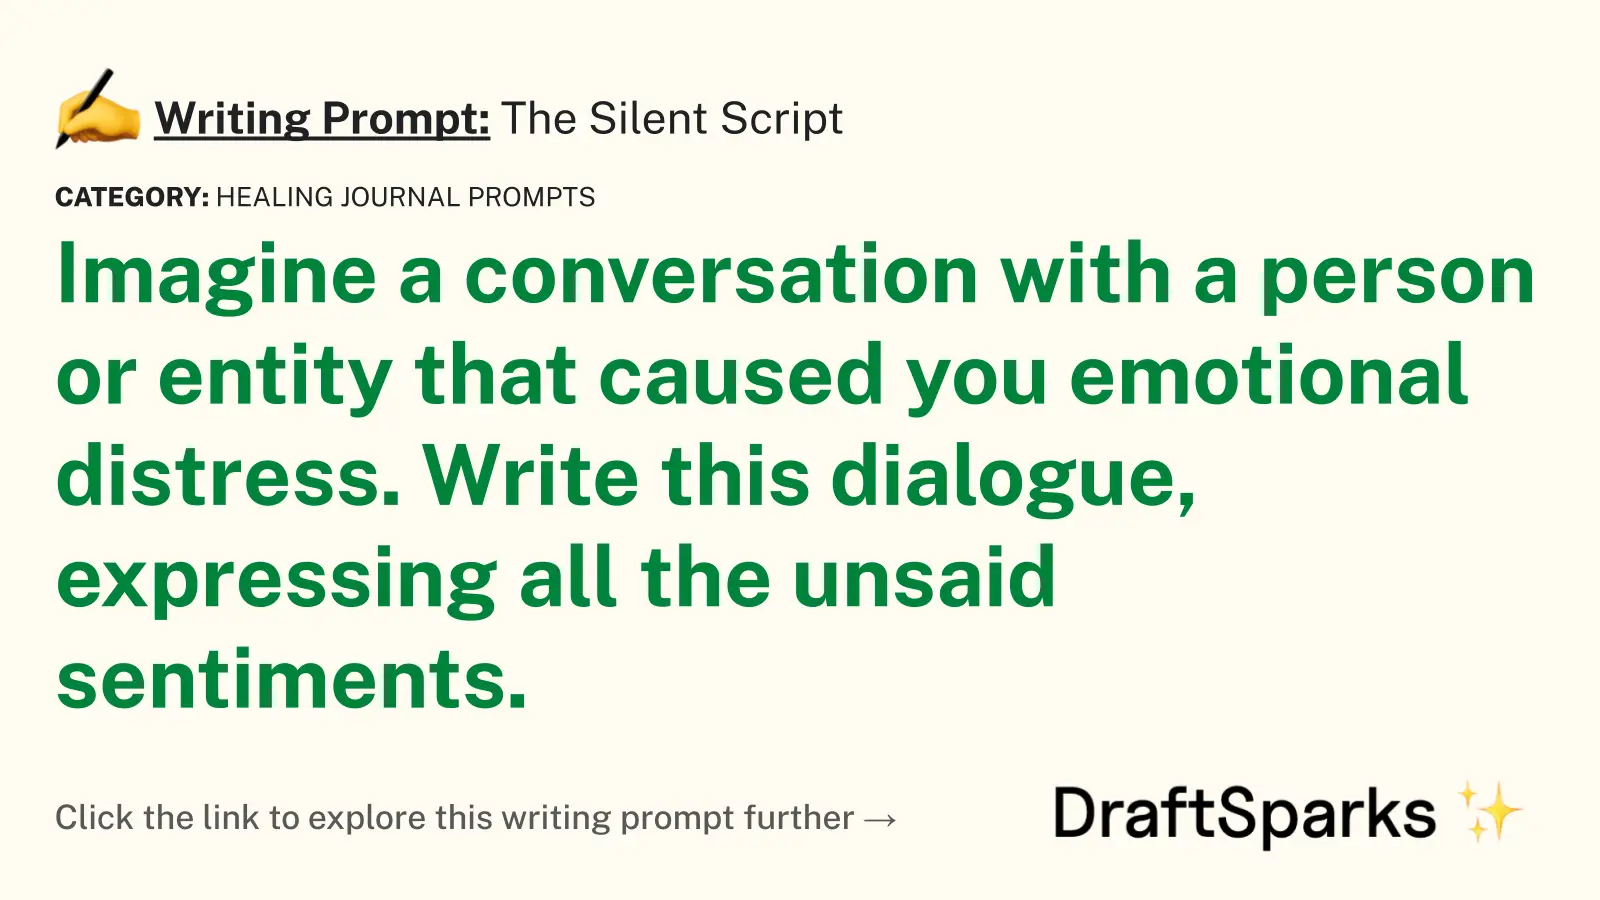 The Silent Script